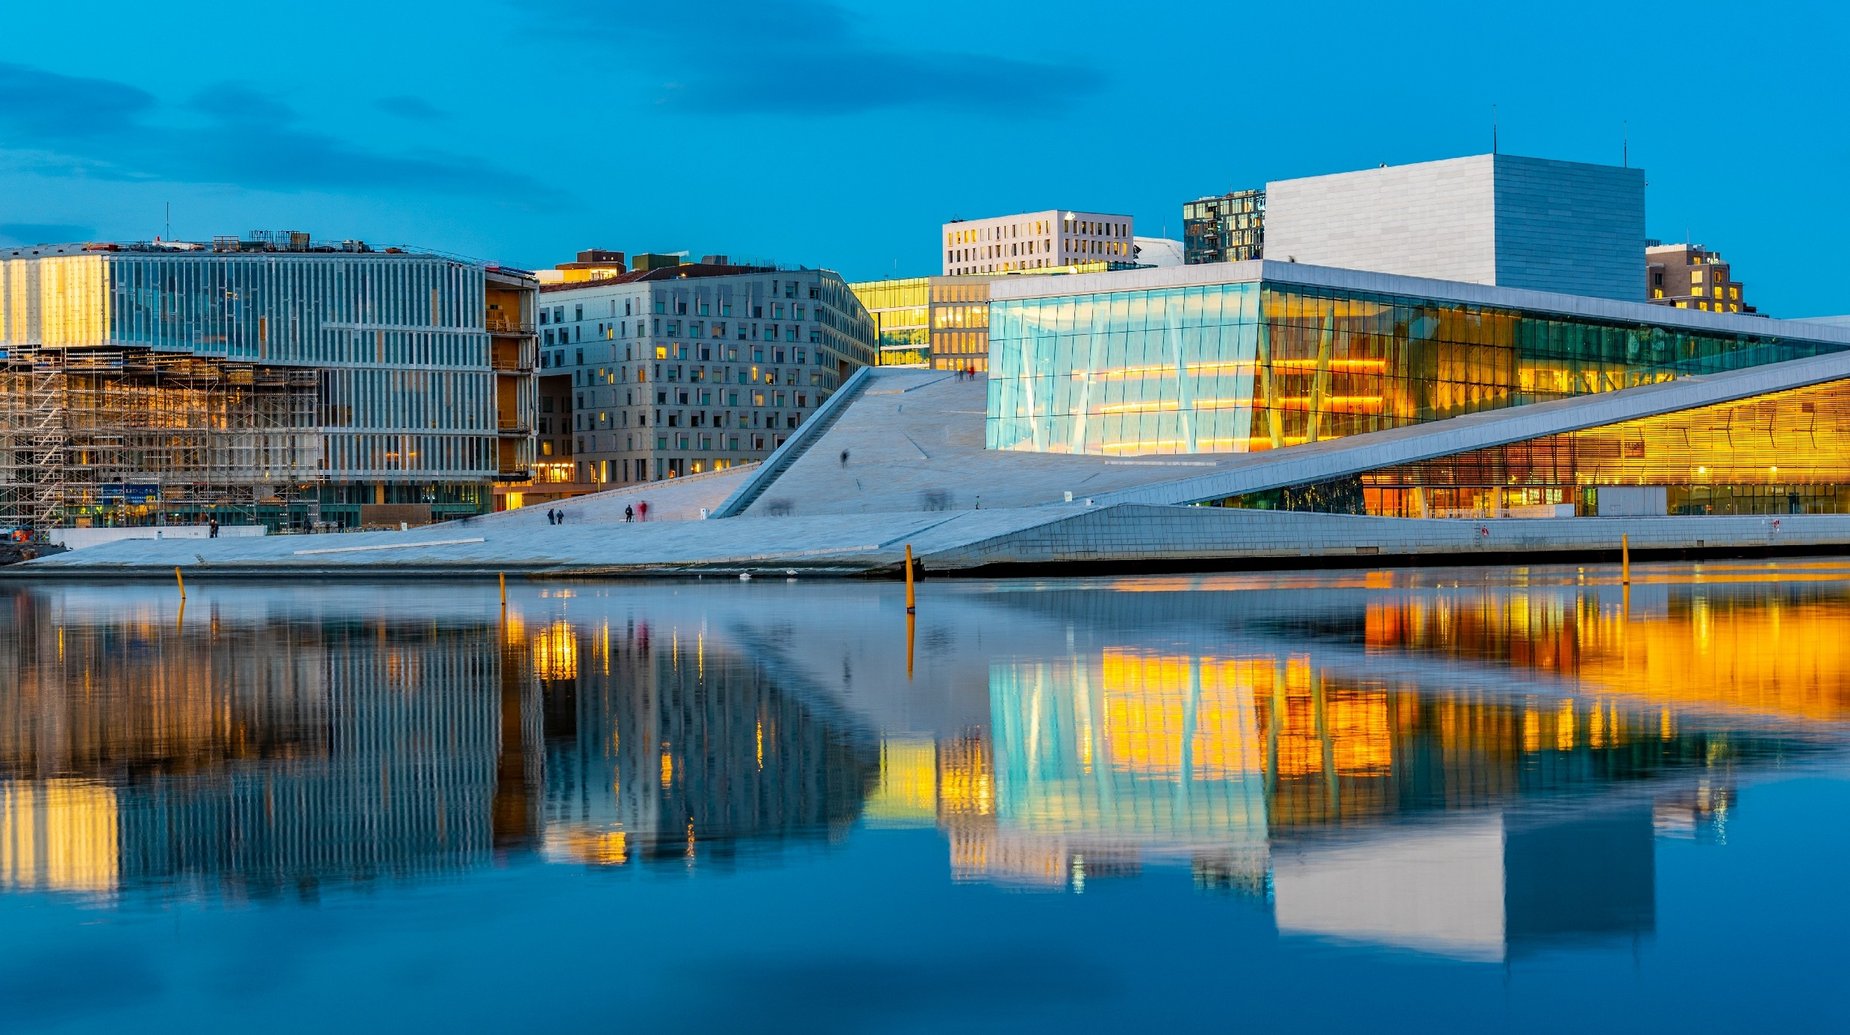 Opera house Oslo